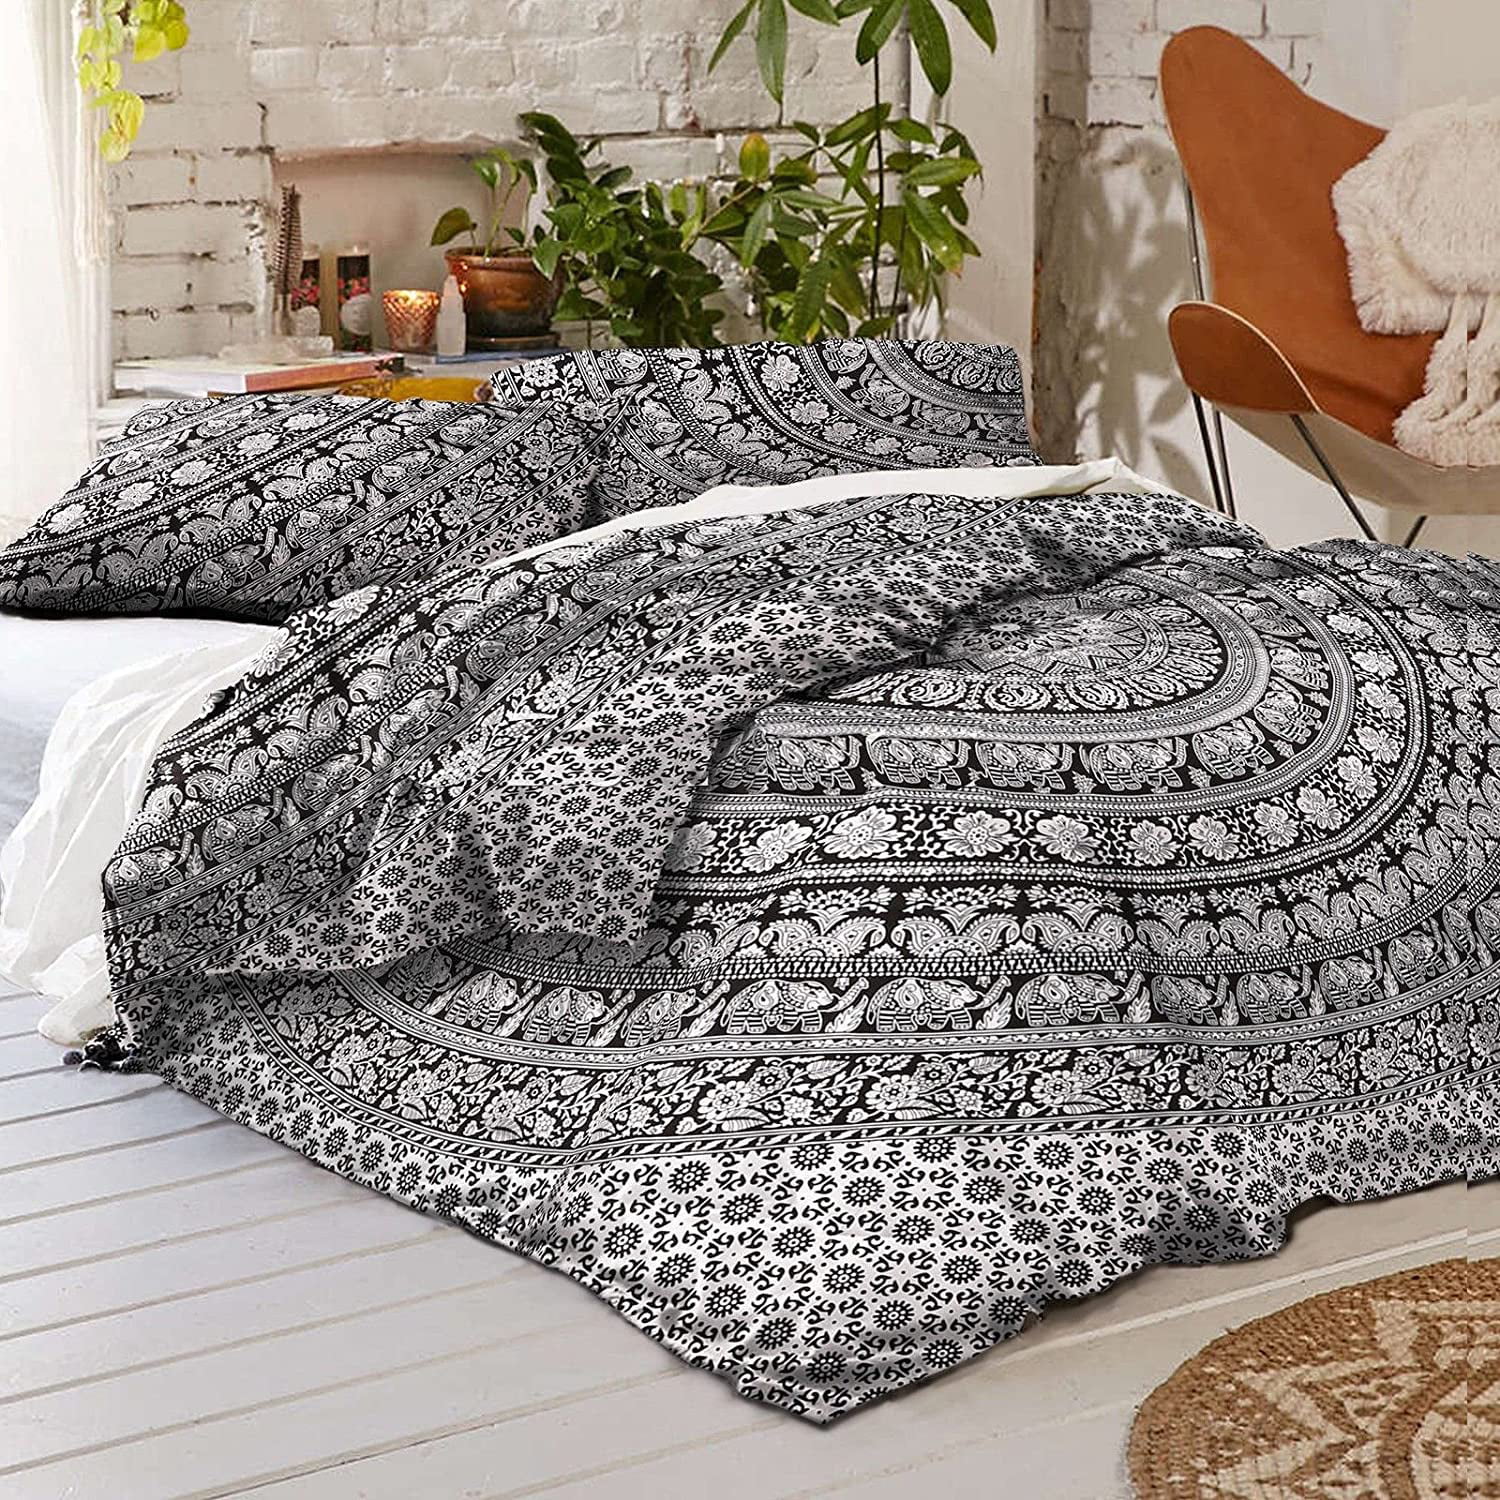 Elephant Indian Mandala Boho Bed Sheet Bedding Set Throw Tapestry With Pillow 